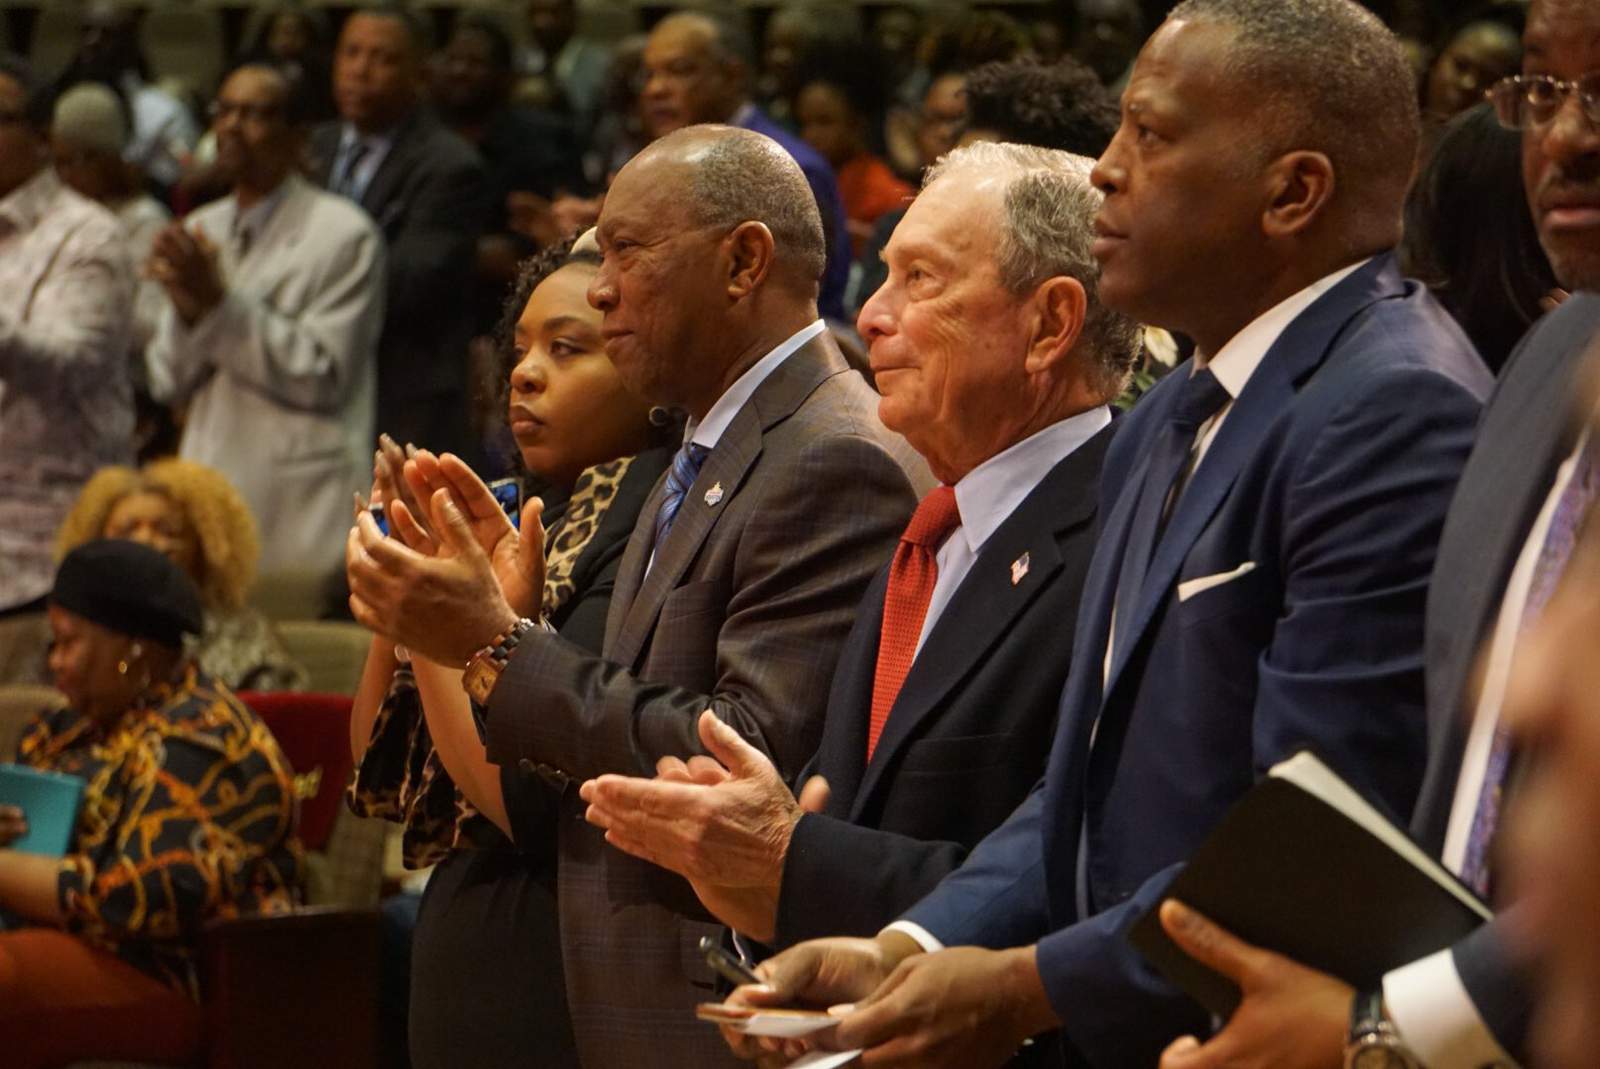 Mayor Sylvester Turner, former New York City Mayor Mike Bloomberg attend church service in northwest Houston